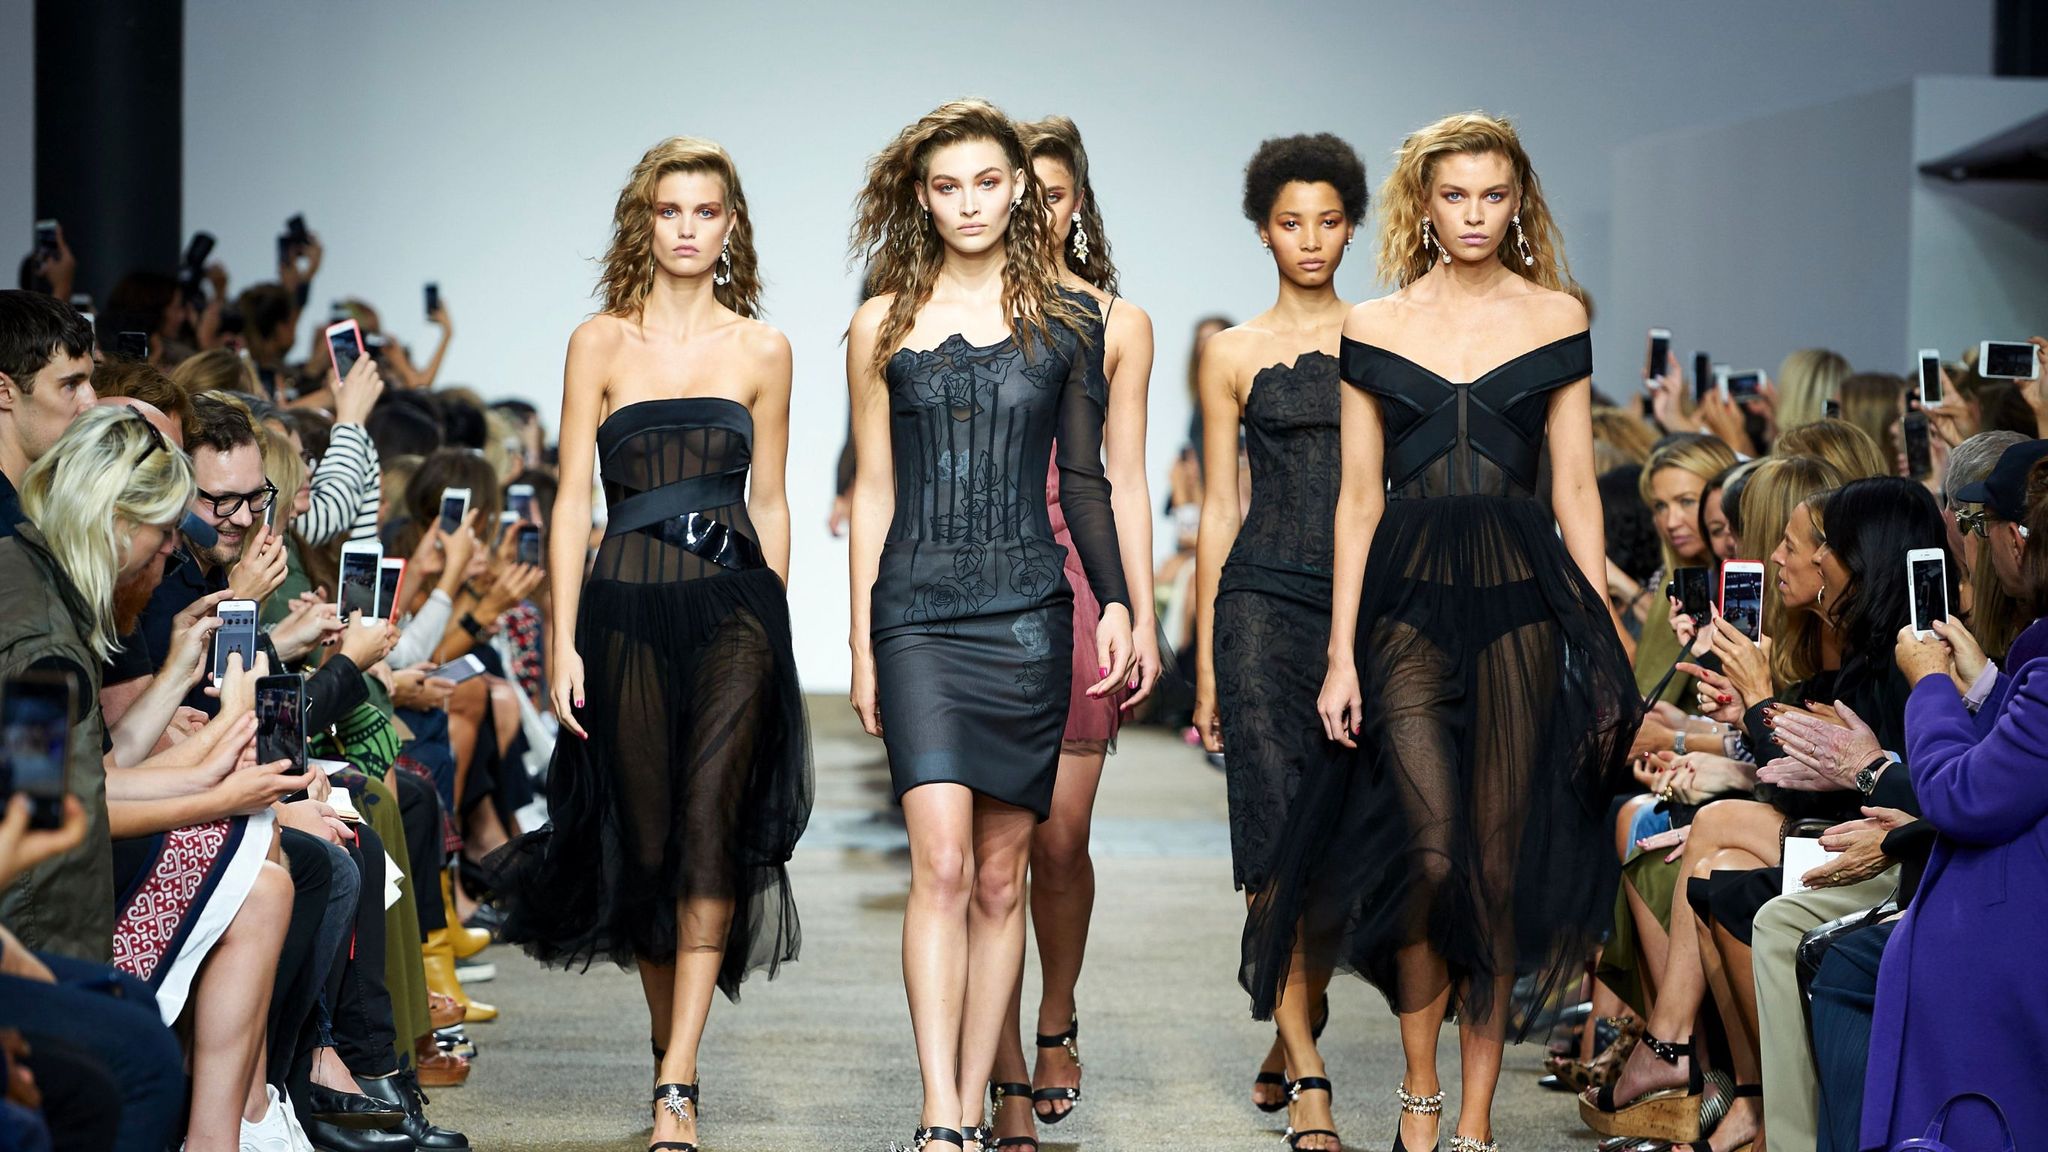 Striking style on the London Fashion Week catwalk | UK News | Sky News